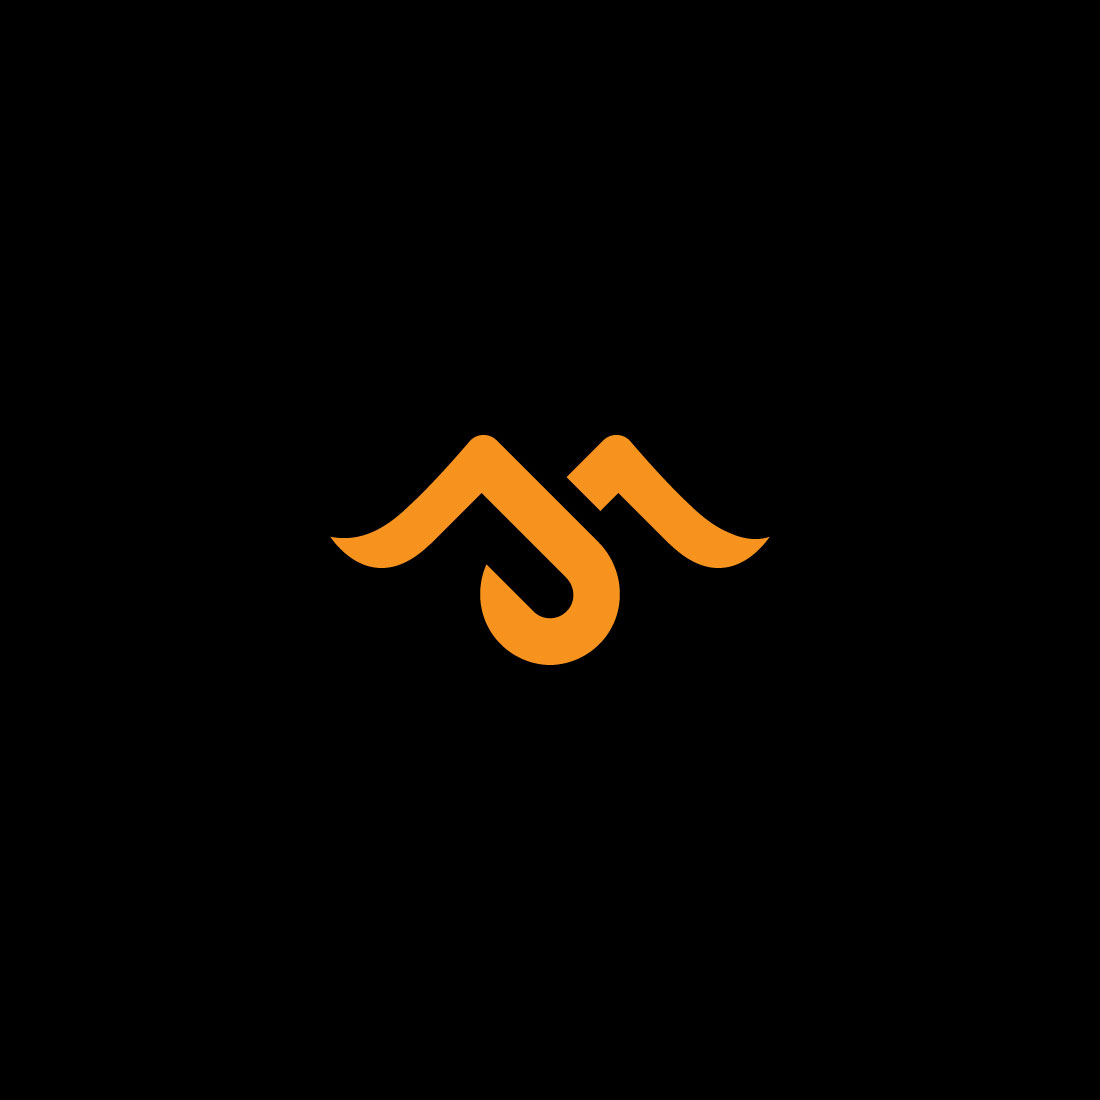 m j logo images